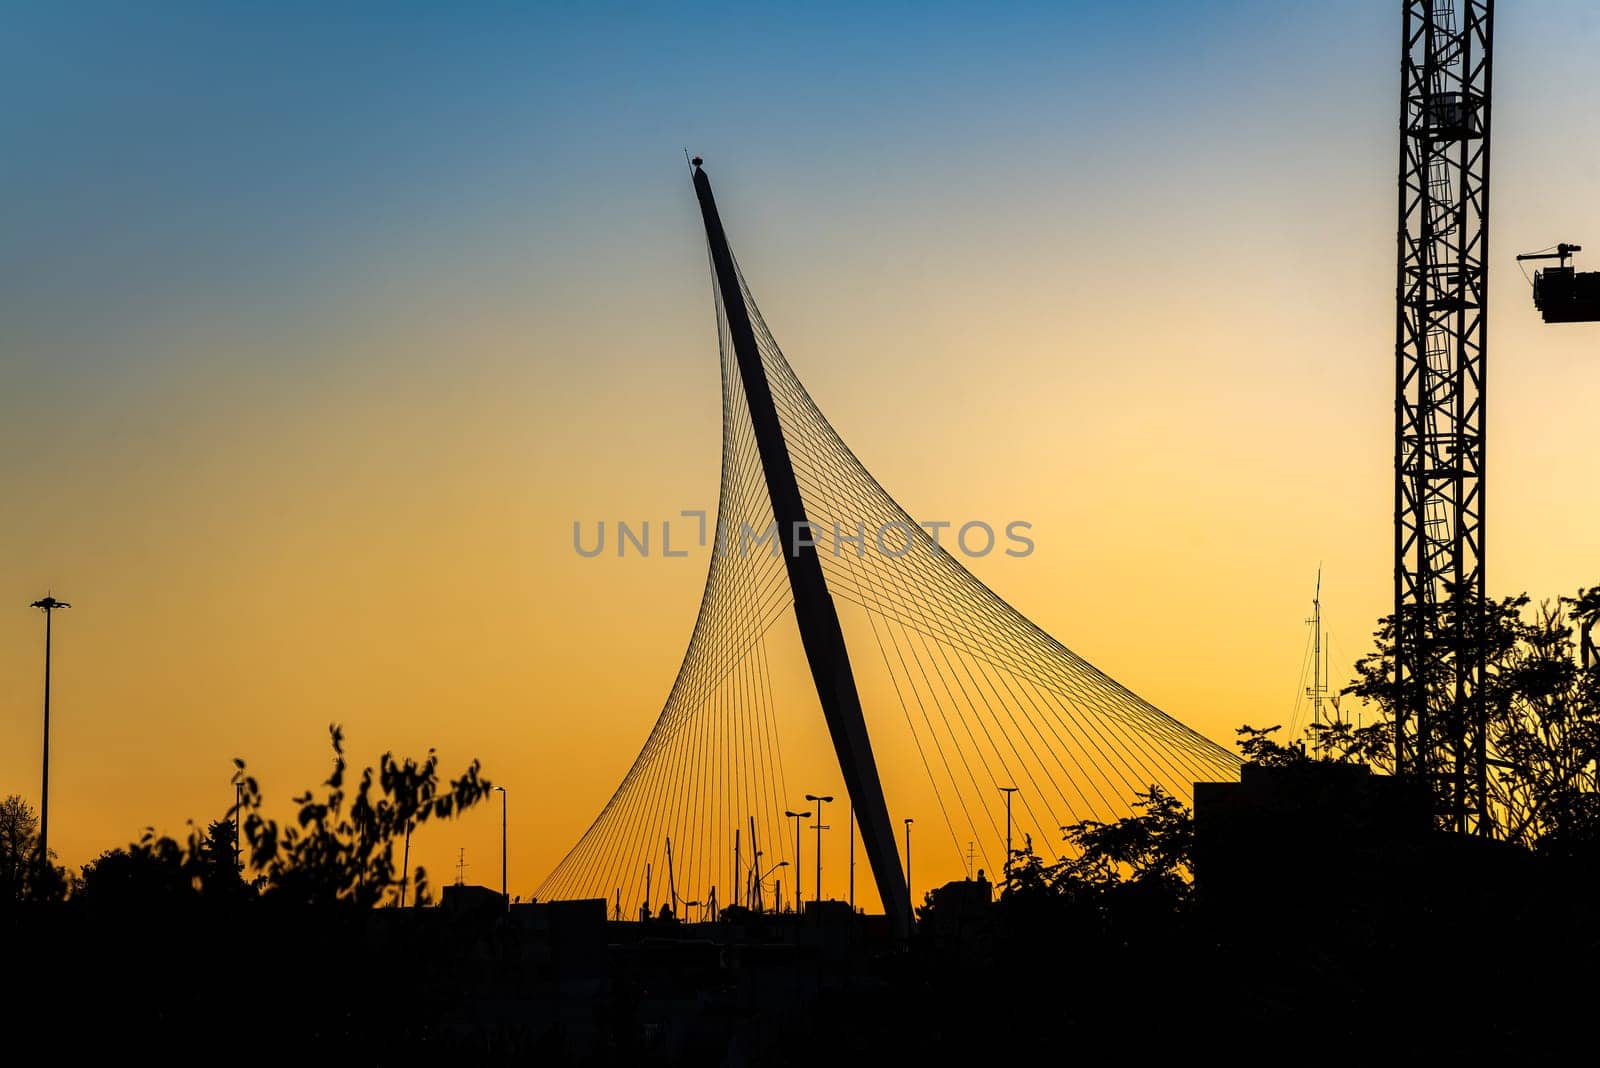 The Chords Bridge - light rail and pedestrian bridge at the entrance to Jerusalem. Bridge silhouette in sunset light